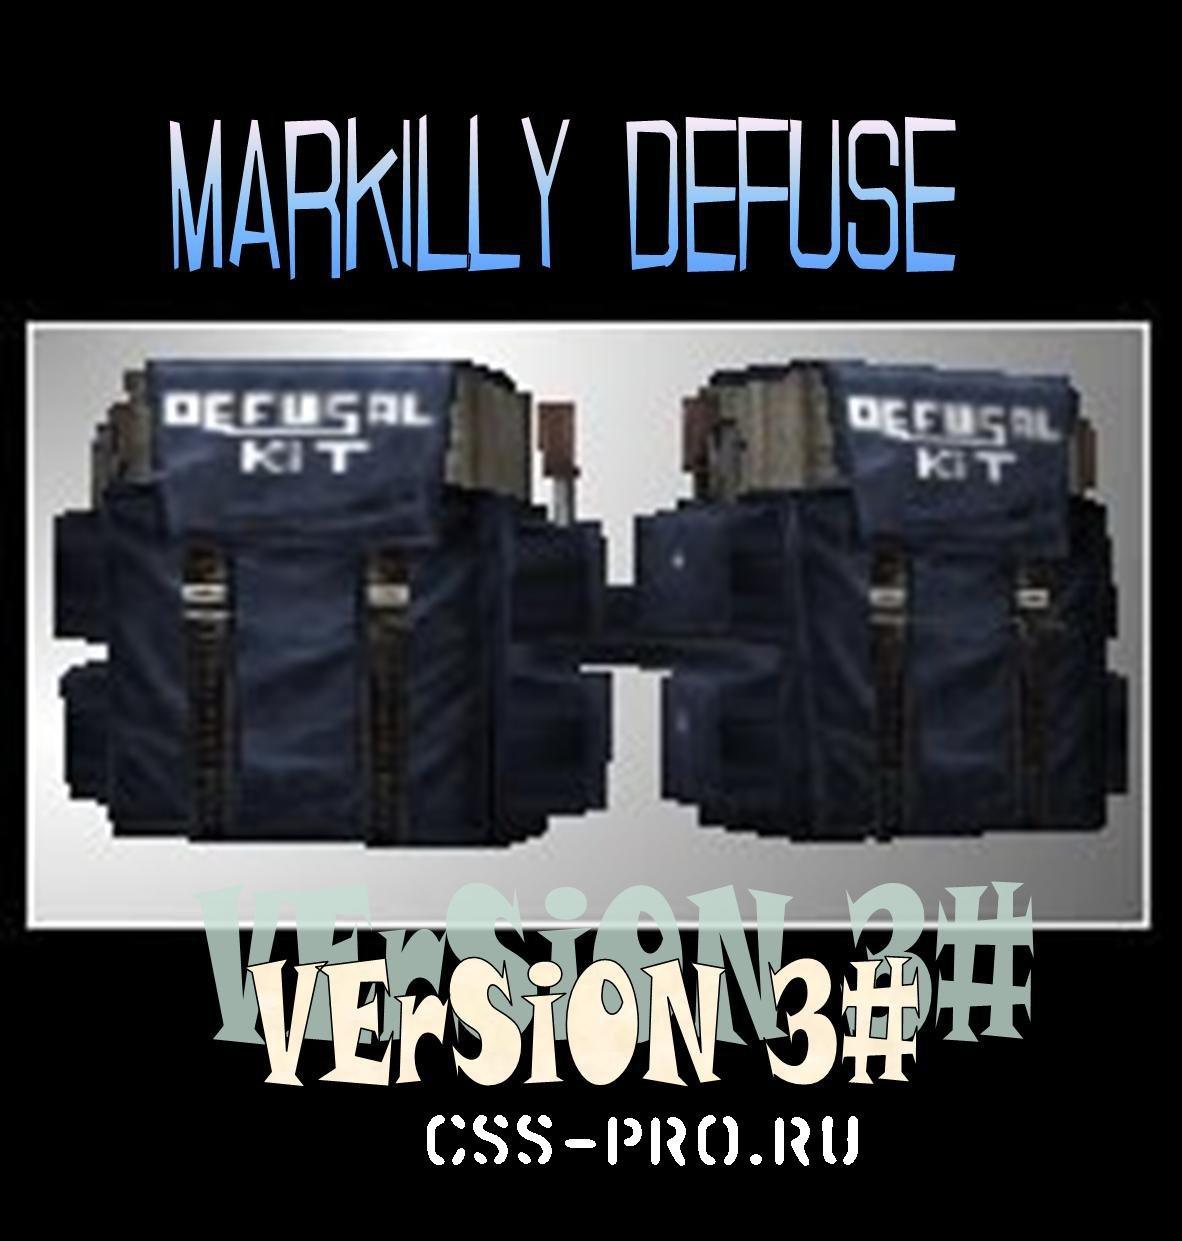 Скин (модель) Defuse Kit (Markilly defuse V3) для css